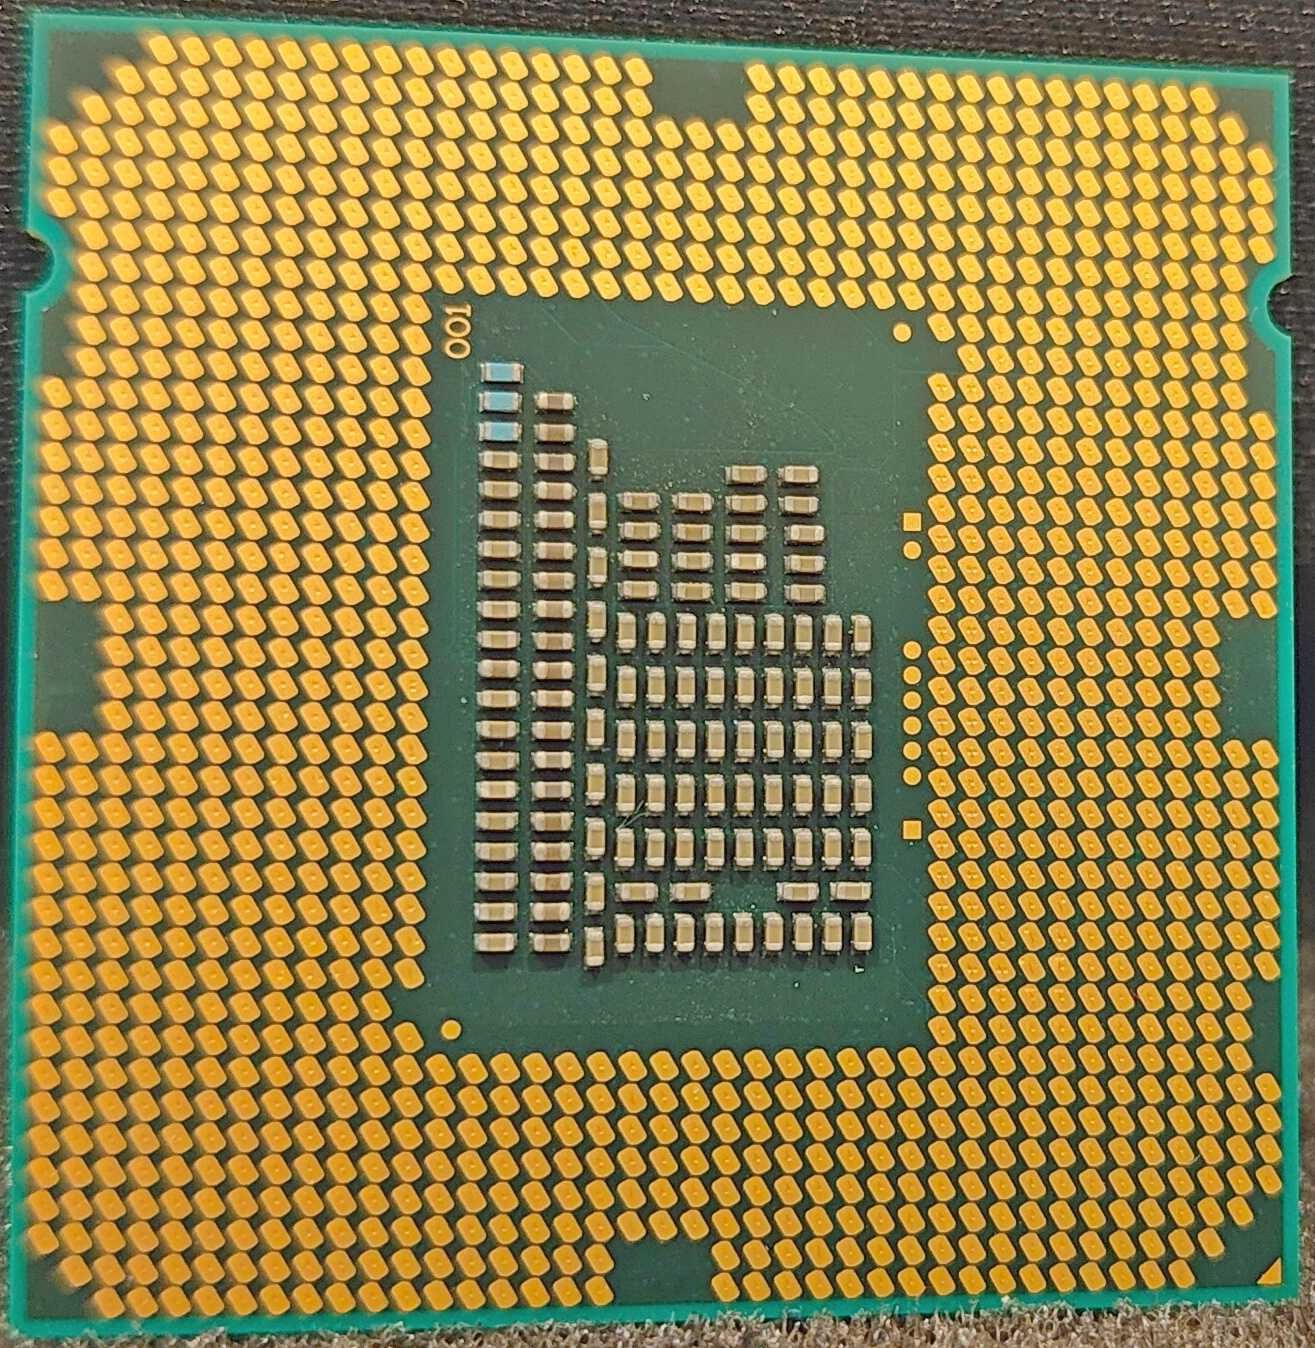 Продам процесор Intel Core i3-2120